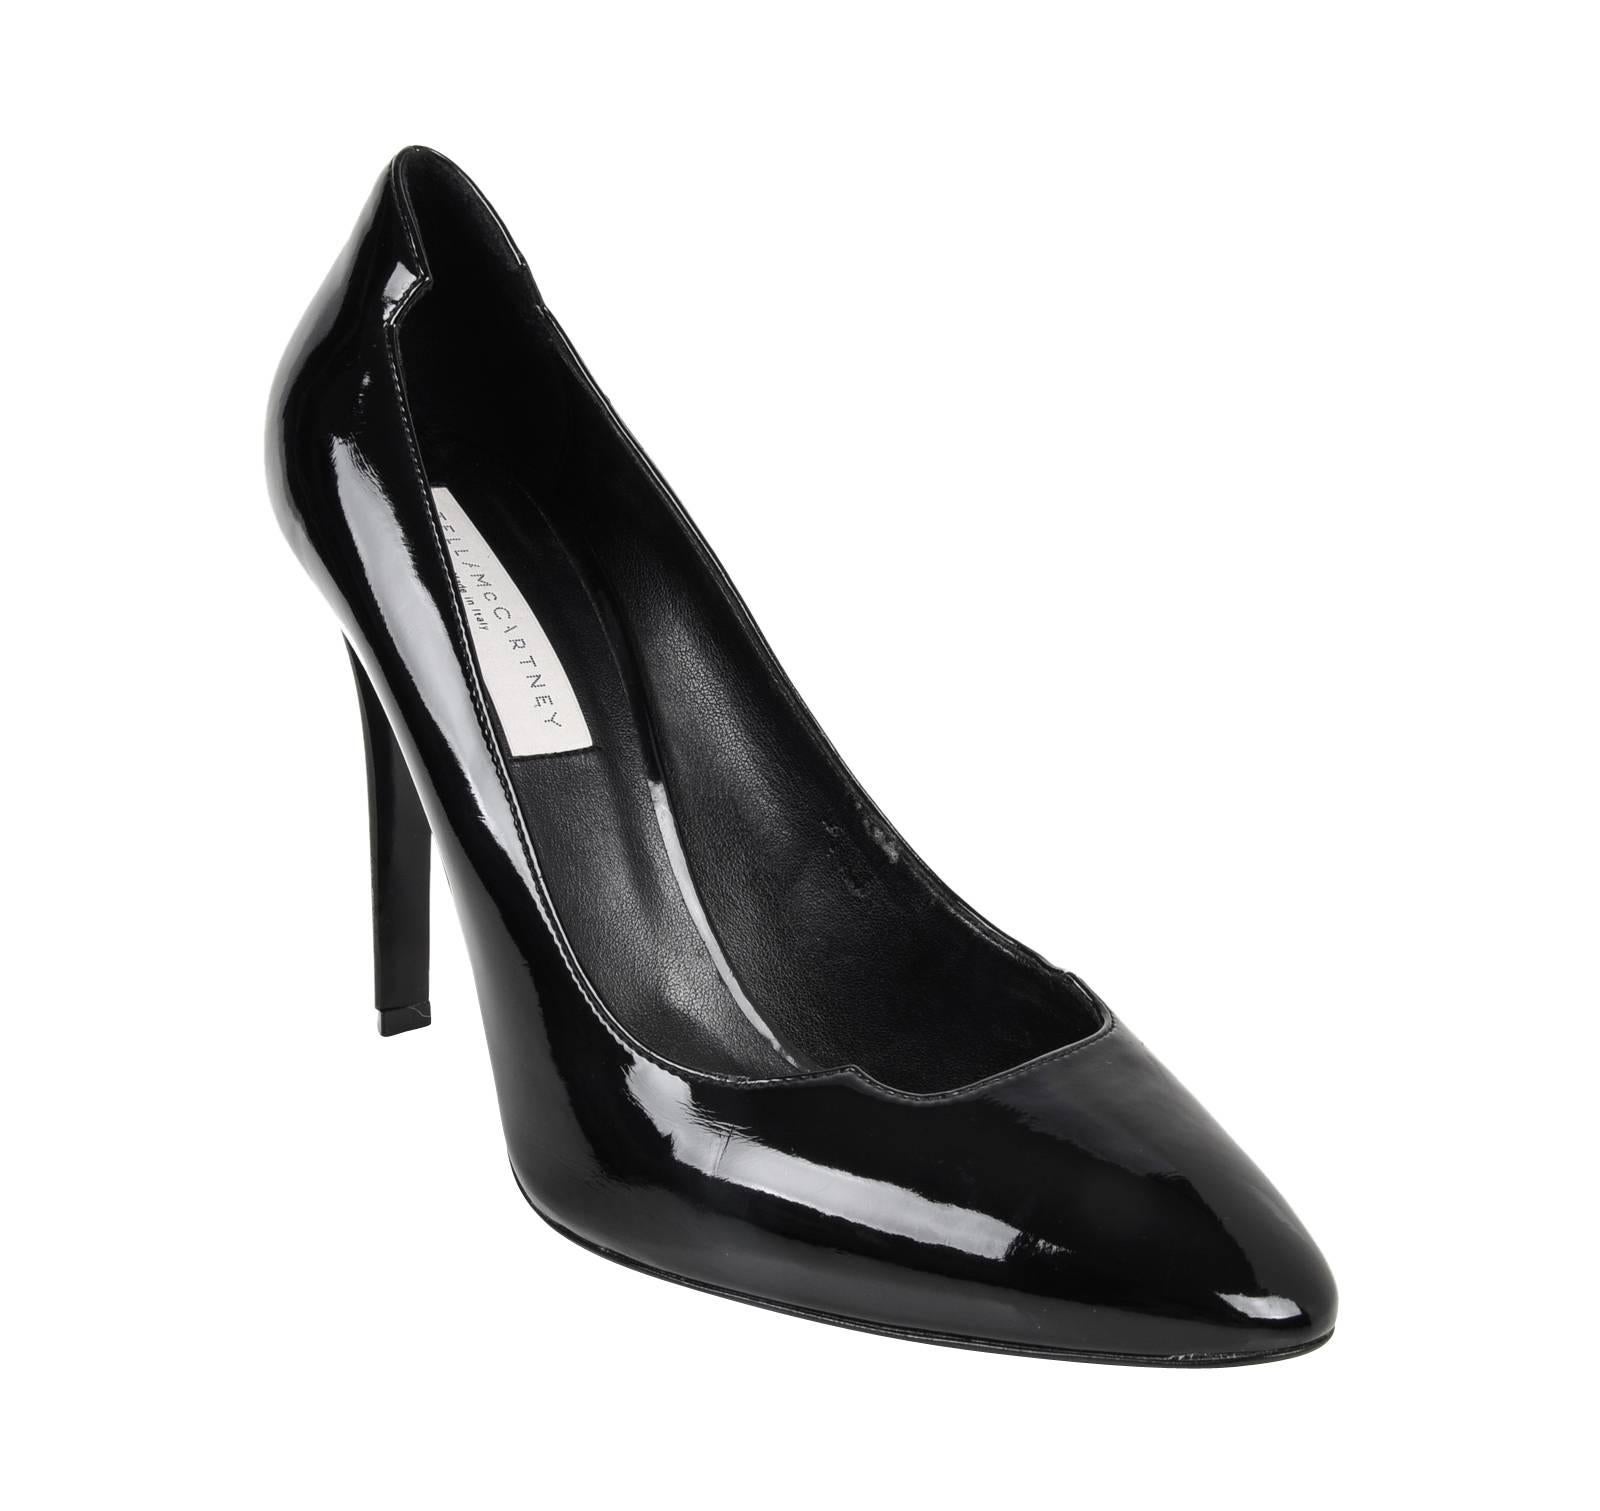 Stella McCartney Shoe Black Patent Leather Morgana Pump 40 / 10 New 1